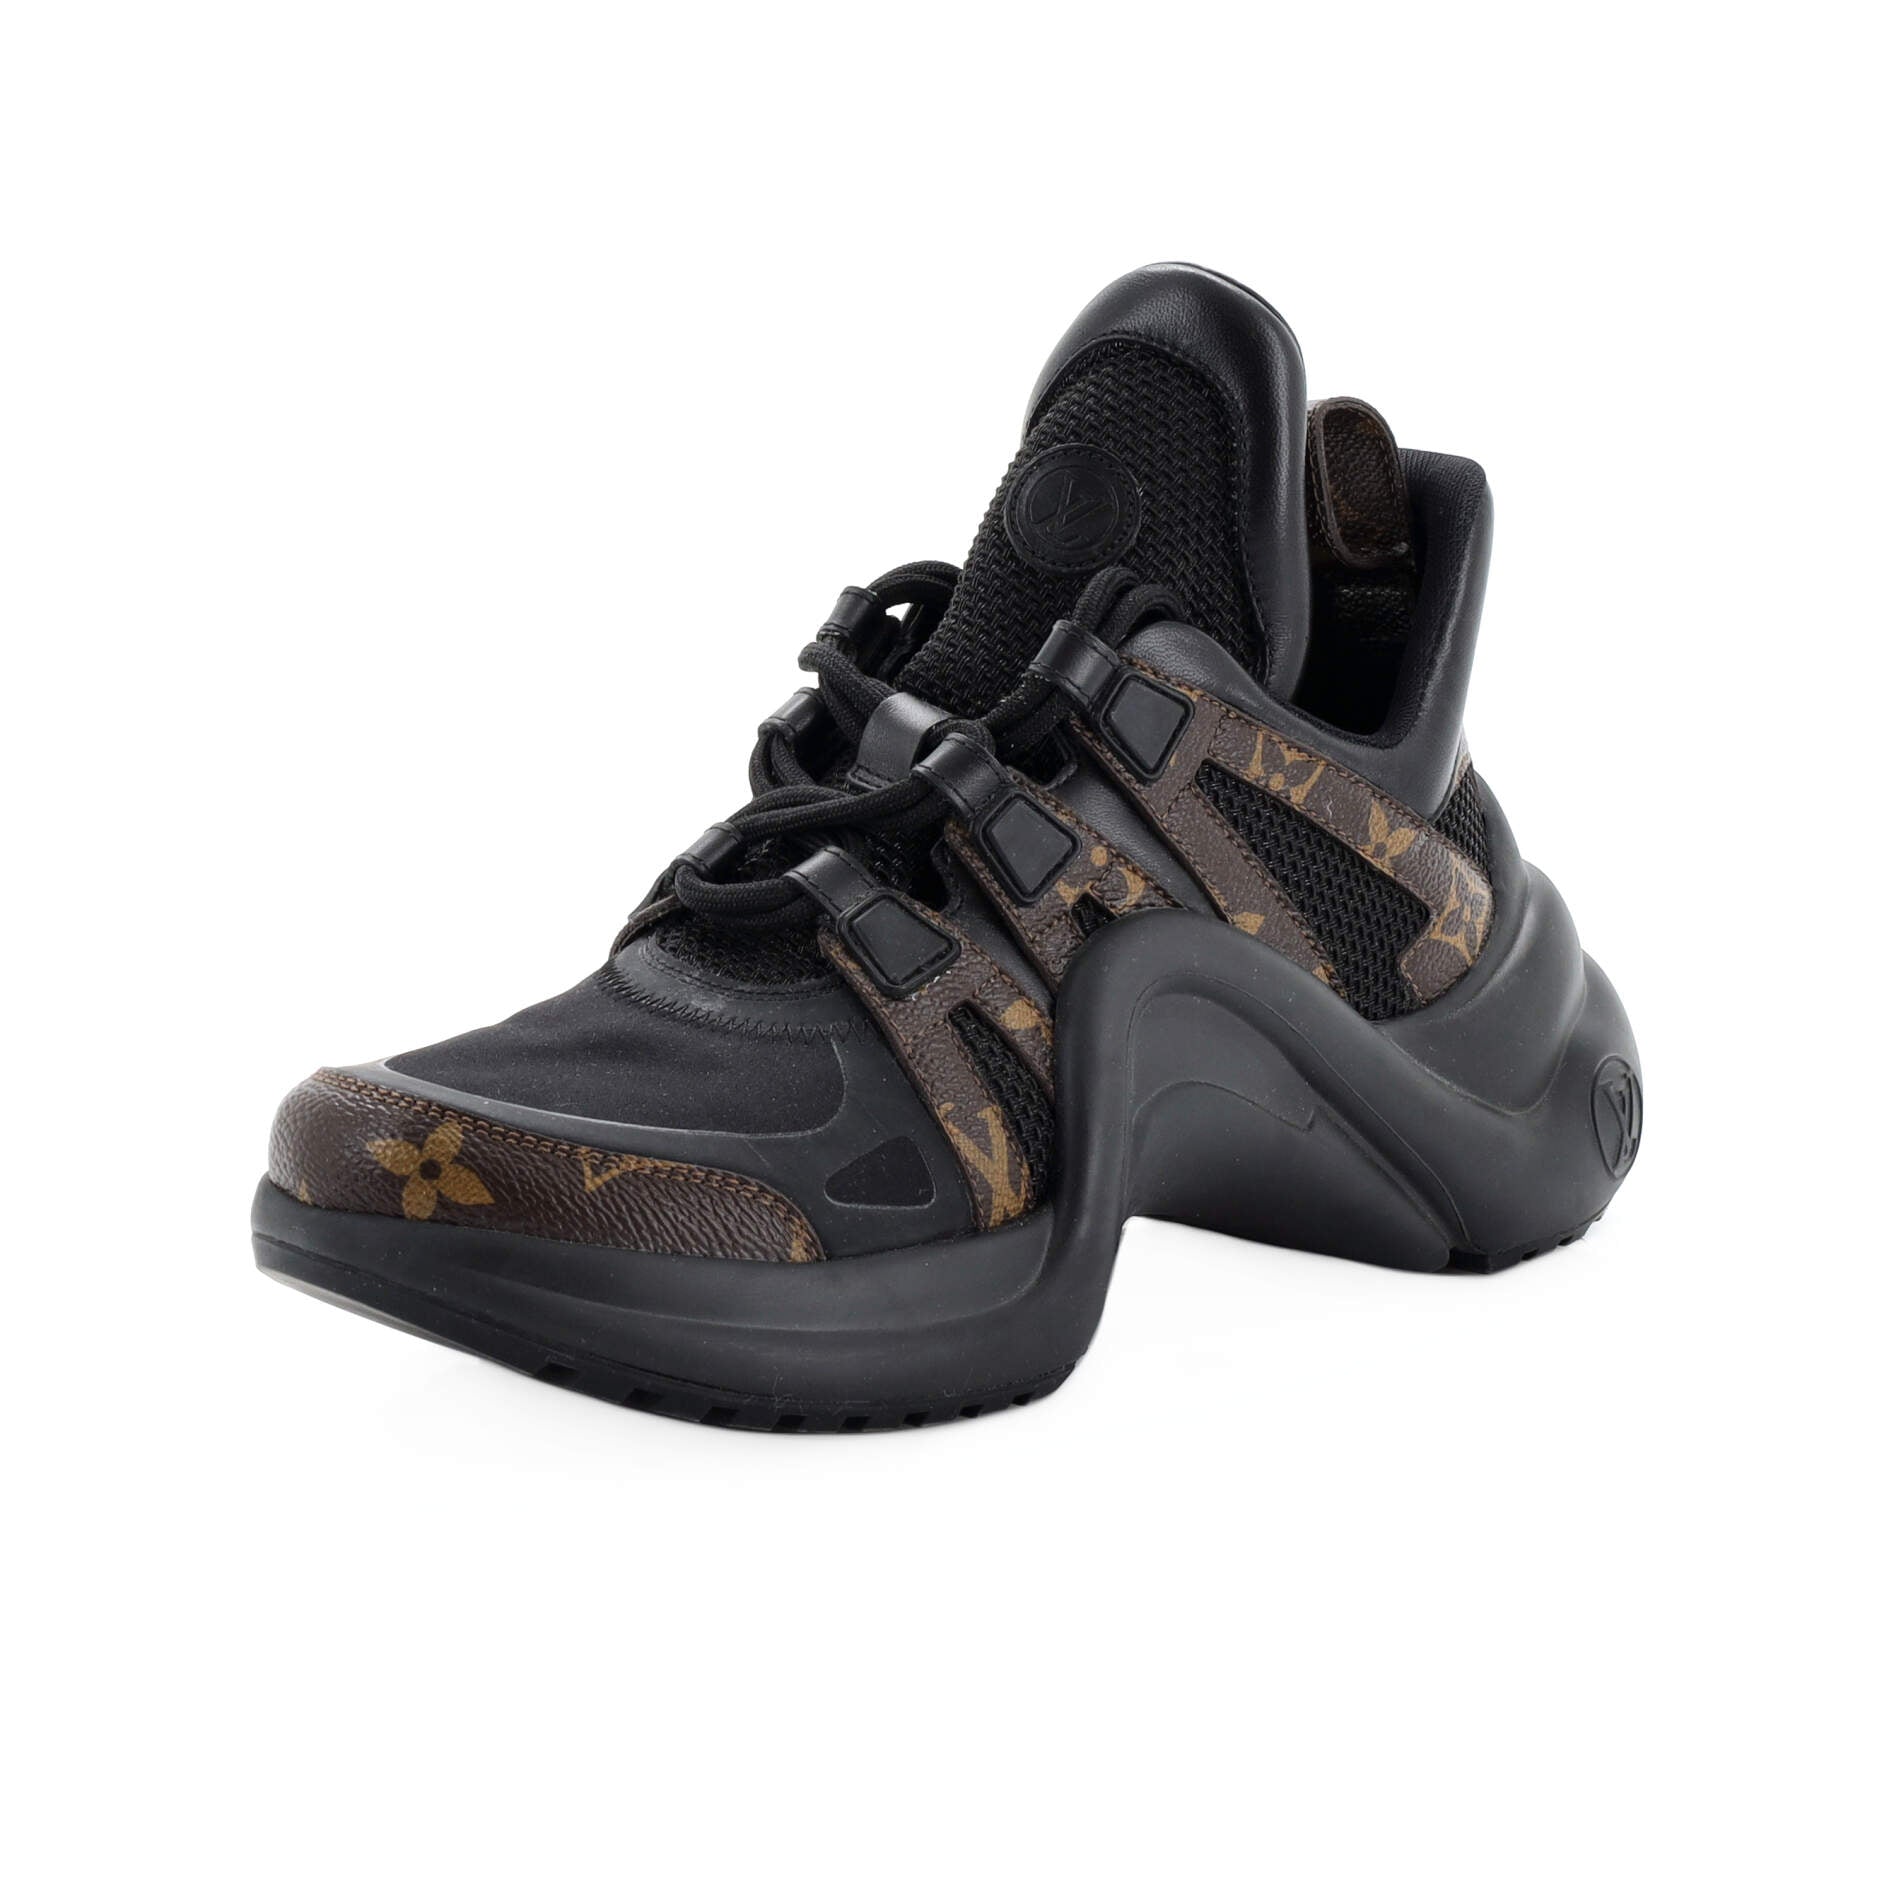 Louis Vuitton Stellar Low Top Monogram Mesh Sneakers 38